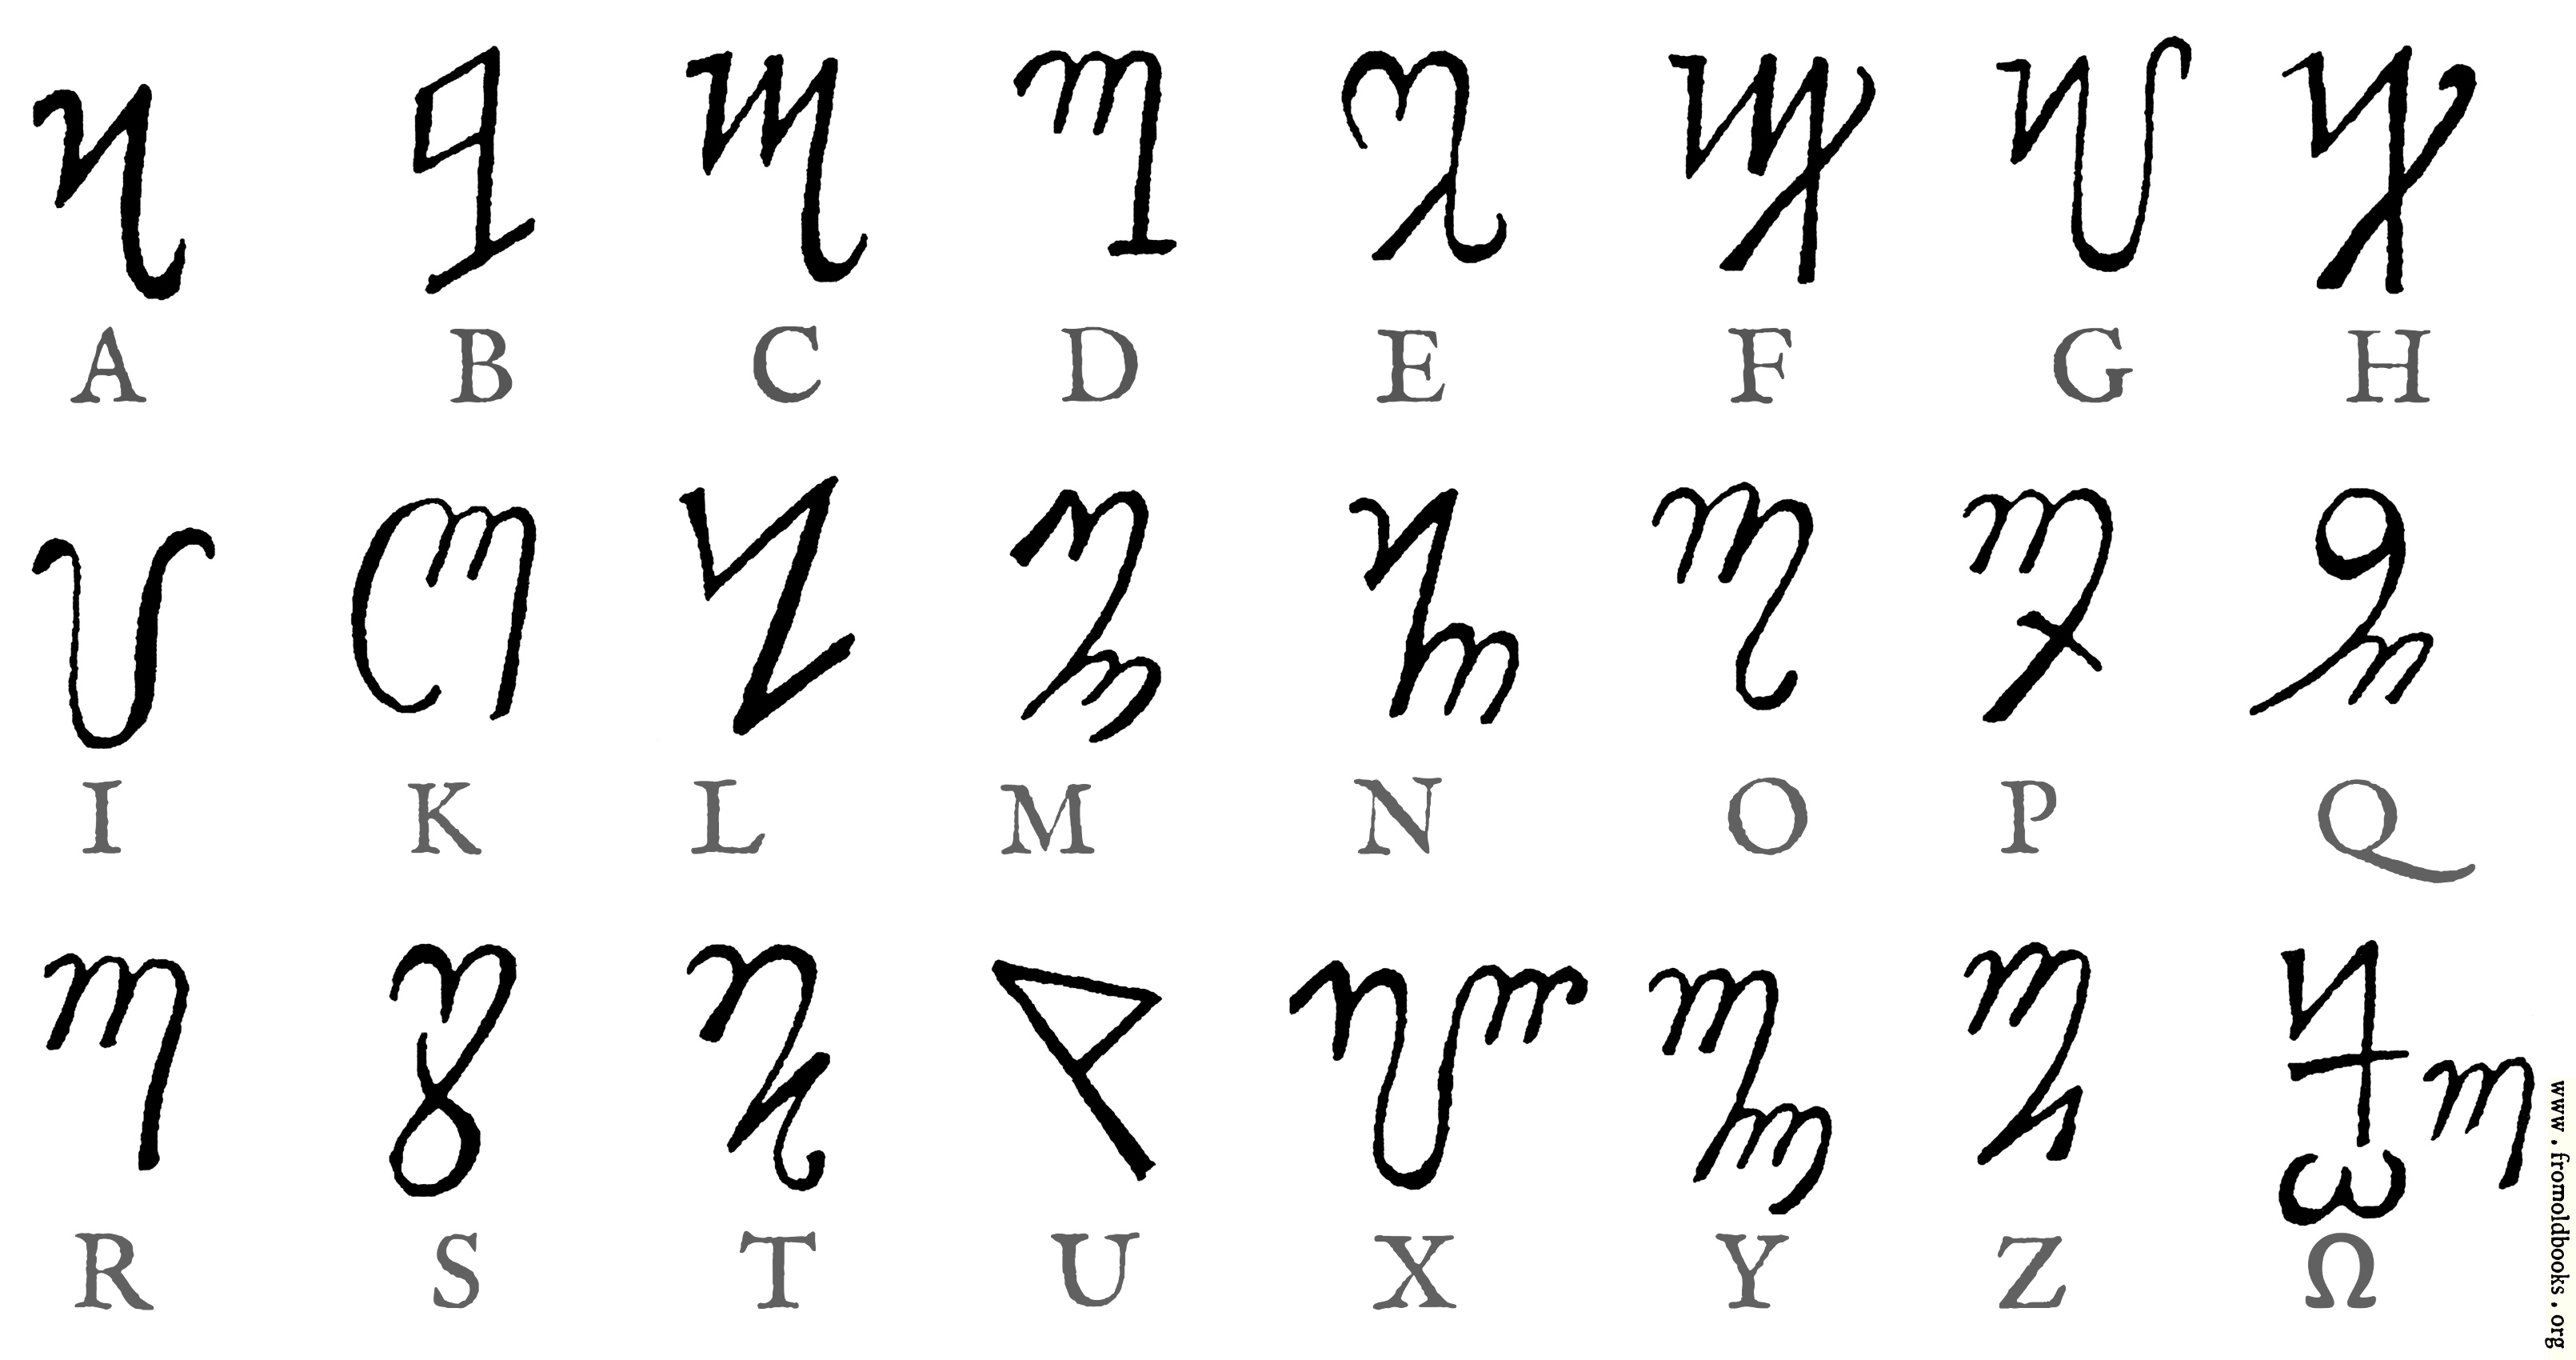 how to write element symbols